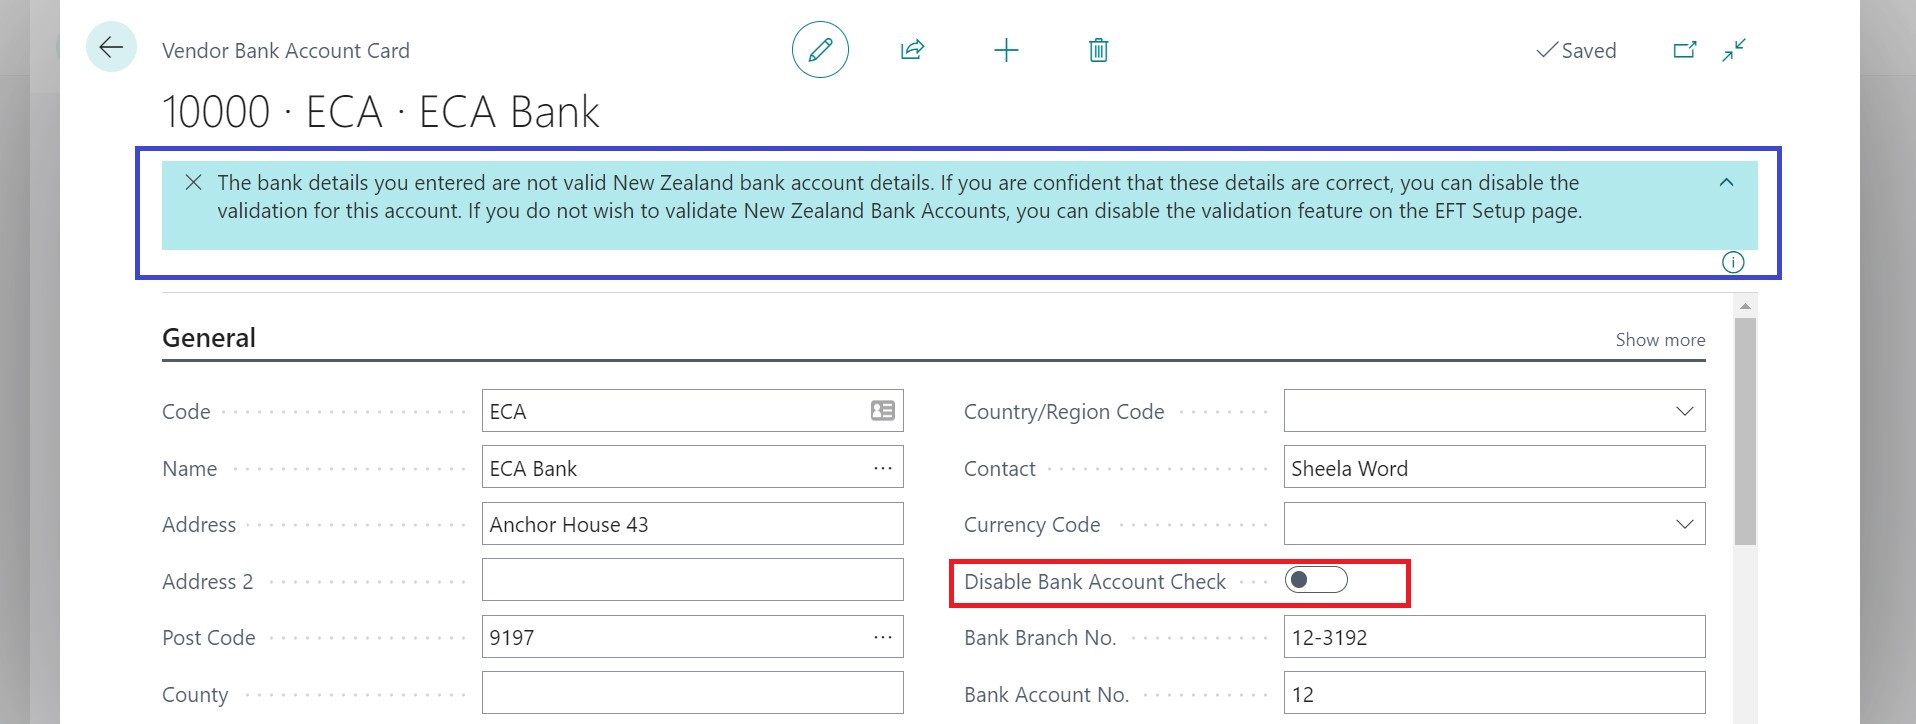 Vendor Bank Account - NZ Account Validation